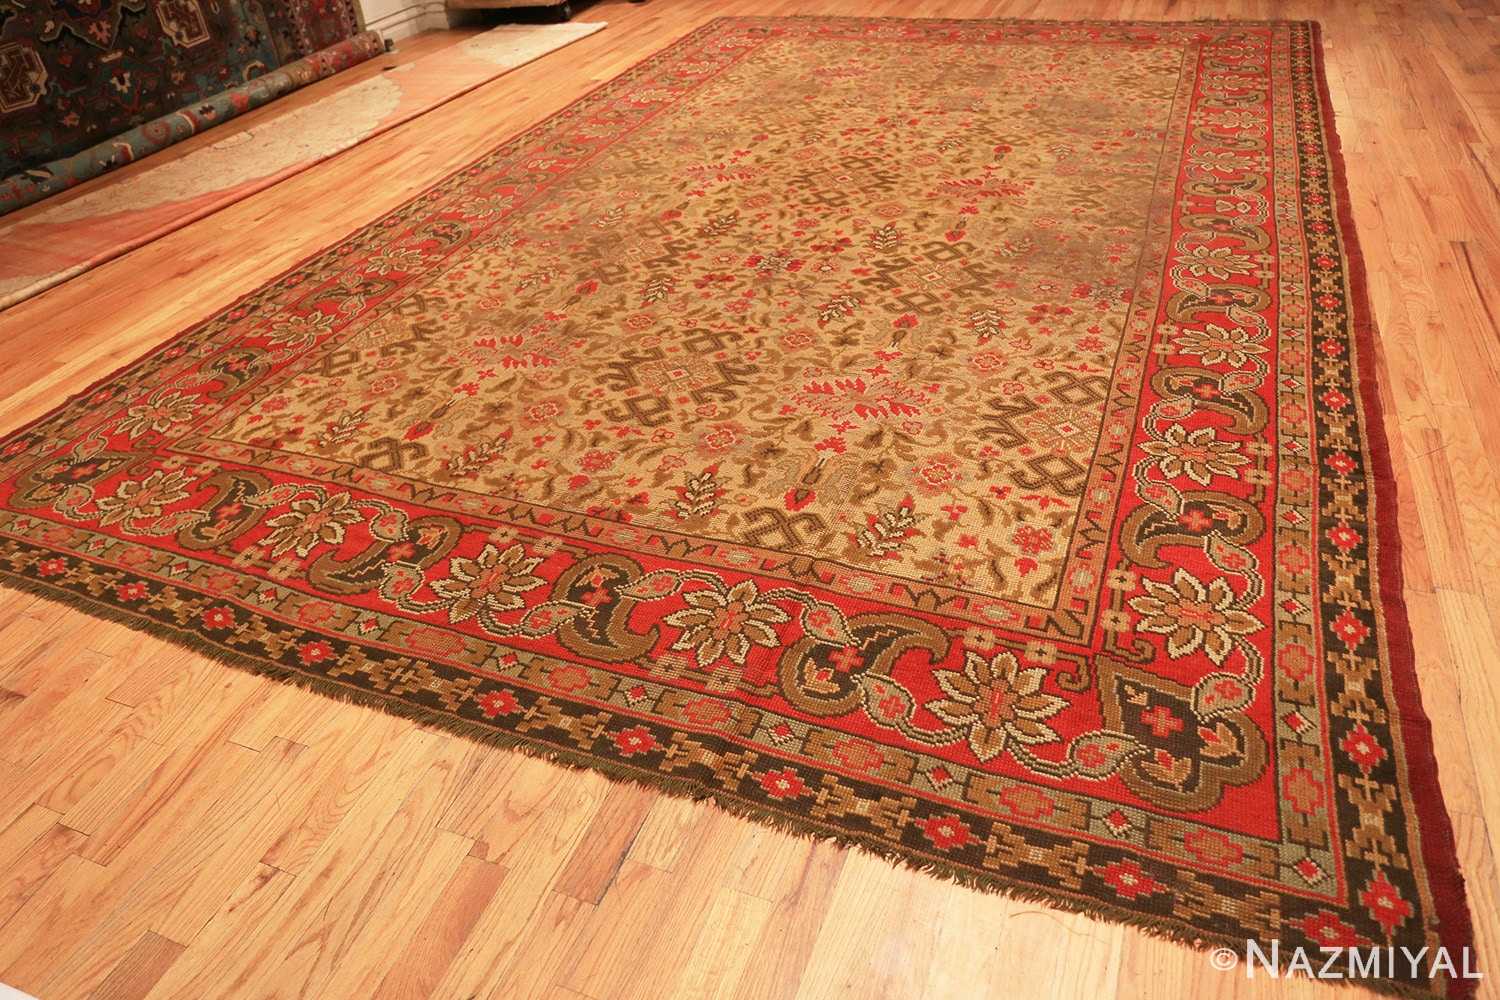 Full Large Shabby chic Antique Irish Donegal carpet 2688 by Nazmiyal